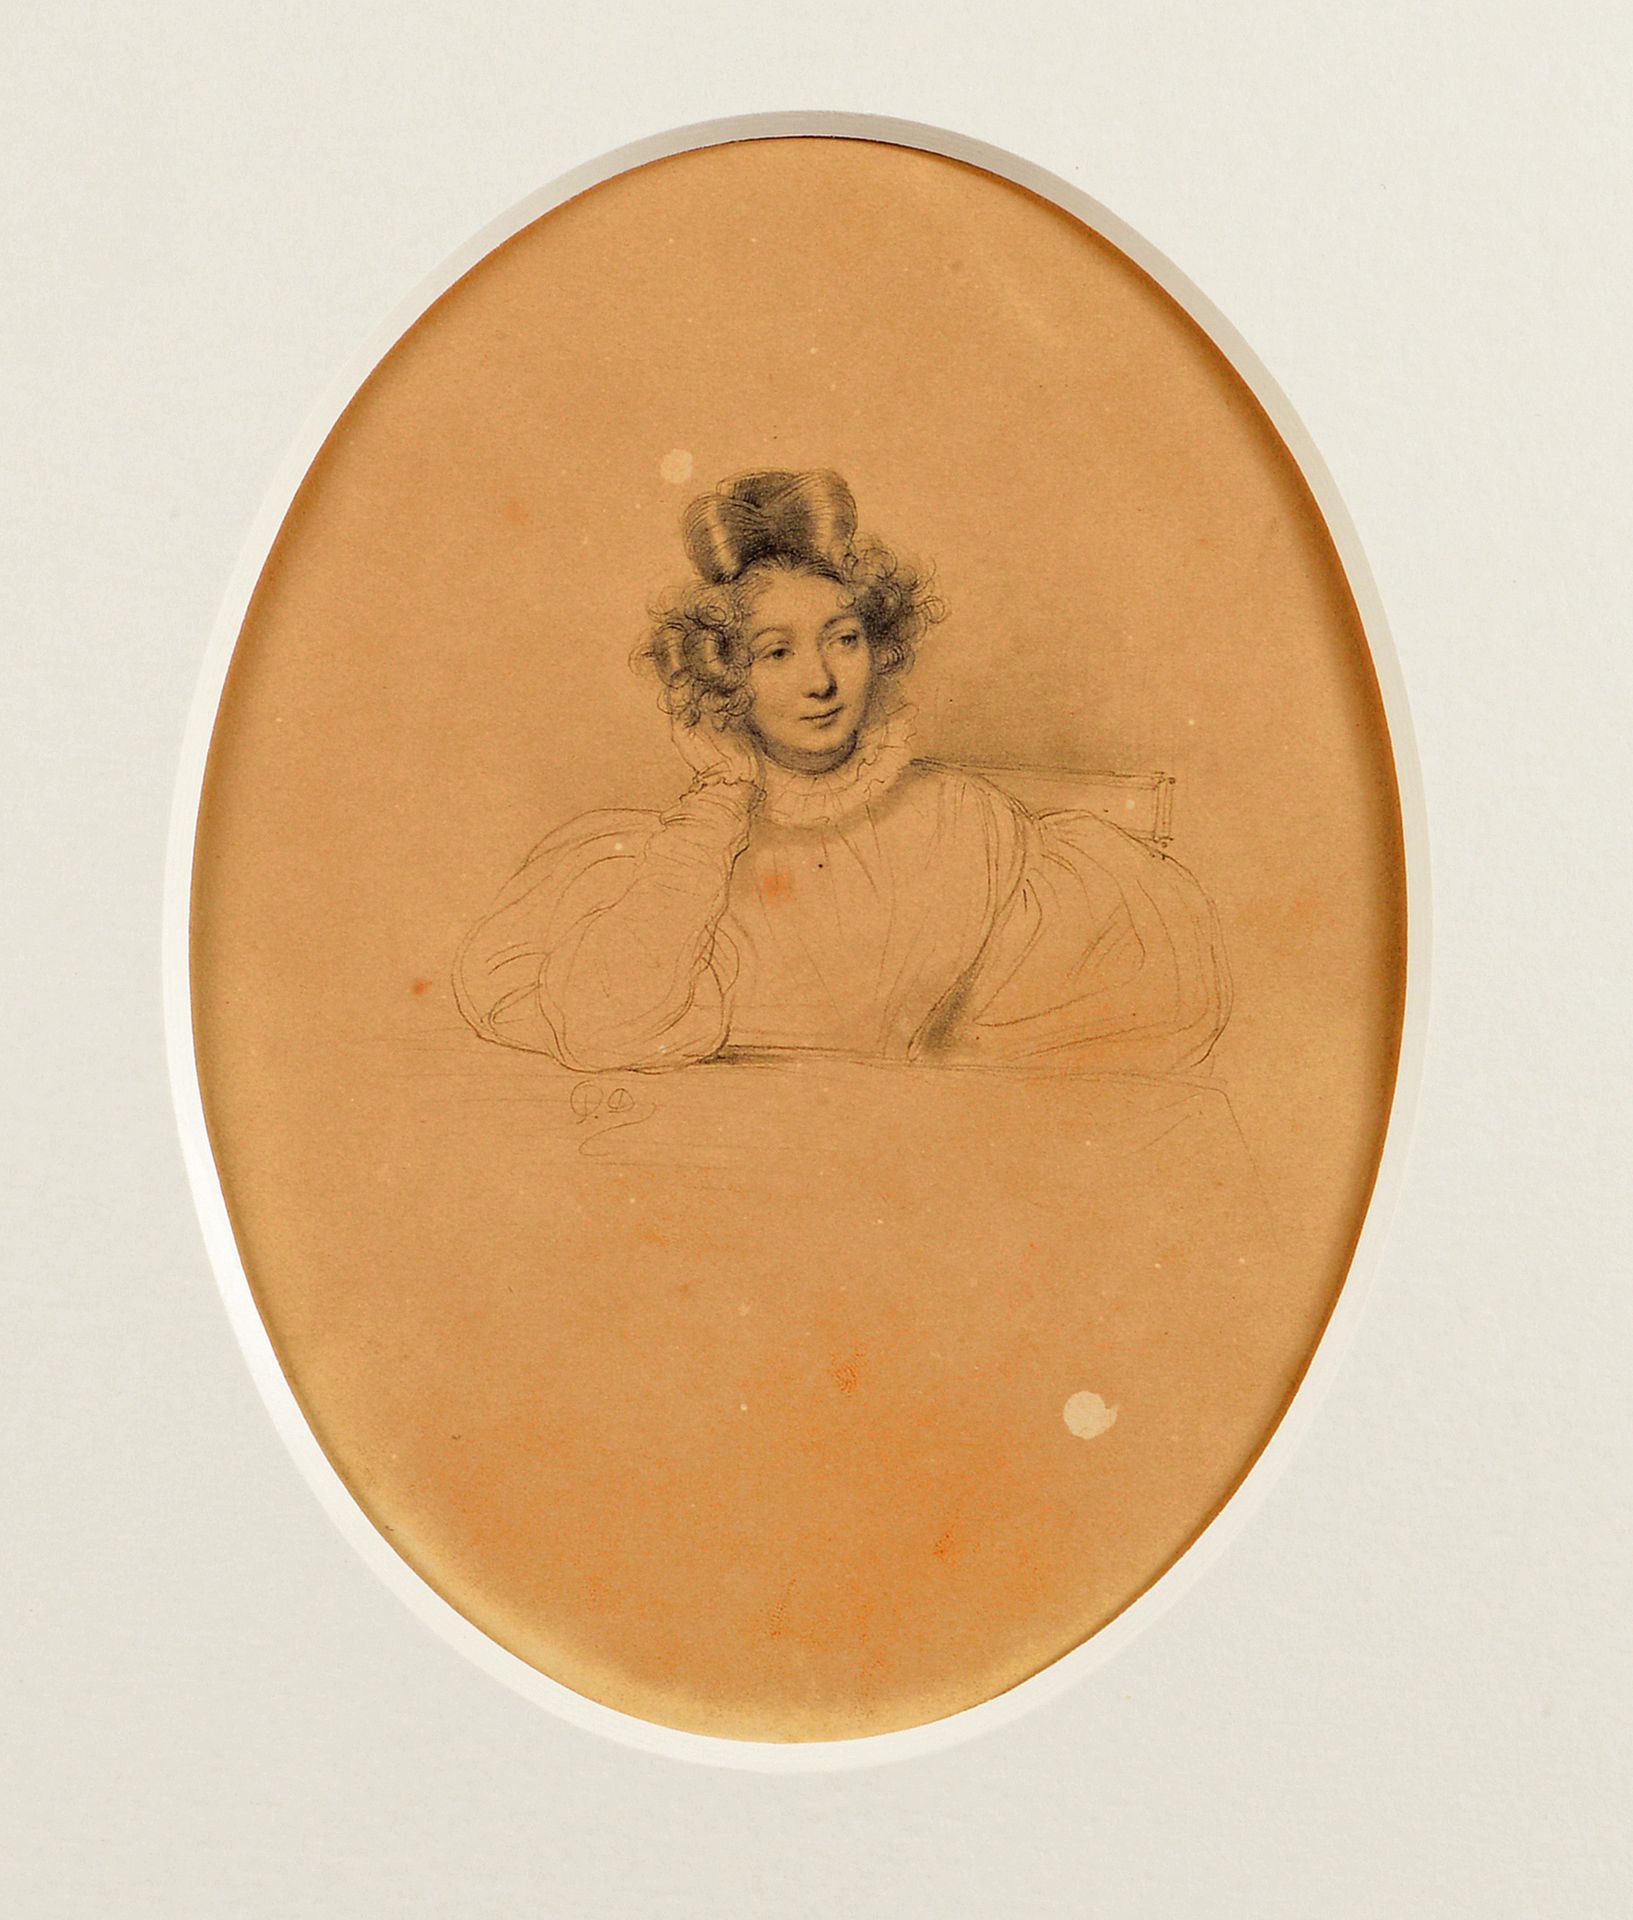 Paul DELAROCHE (Paris 1797-1856) 年轻女子的肖像
黑色铅笔，左下角有P D字样，无光泽 18.3 x 15.5 cm